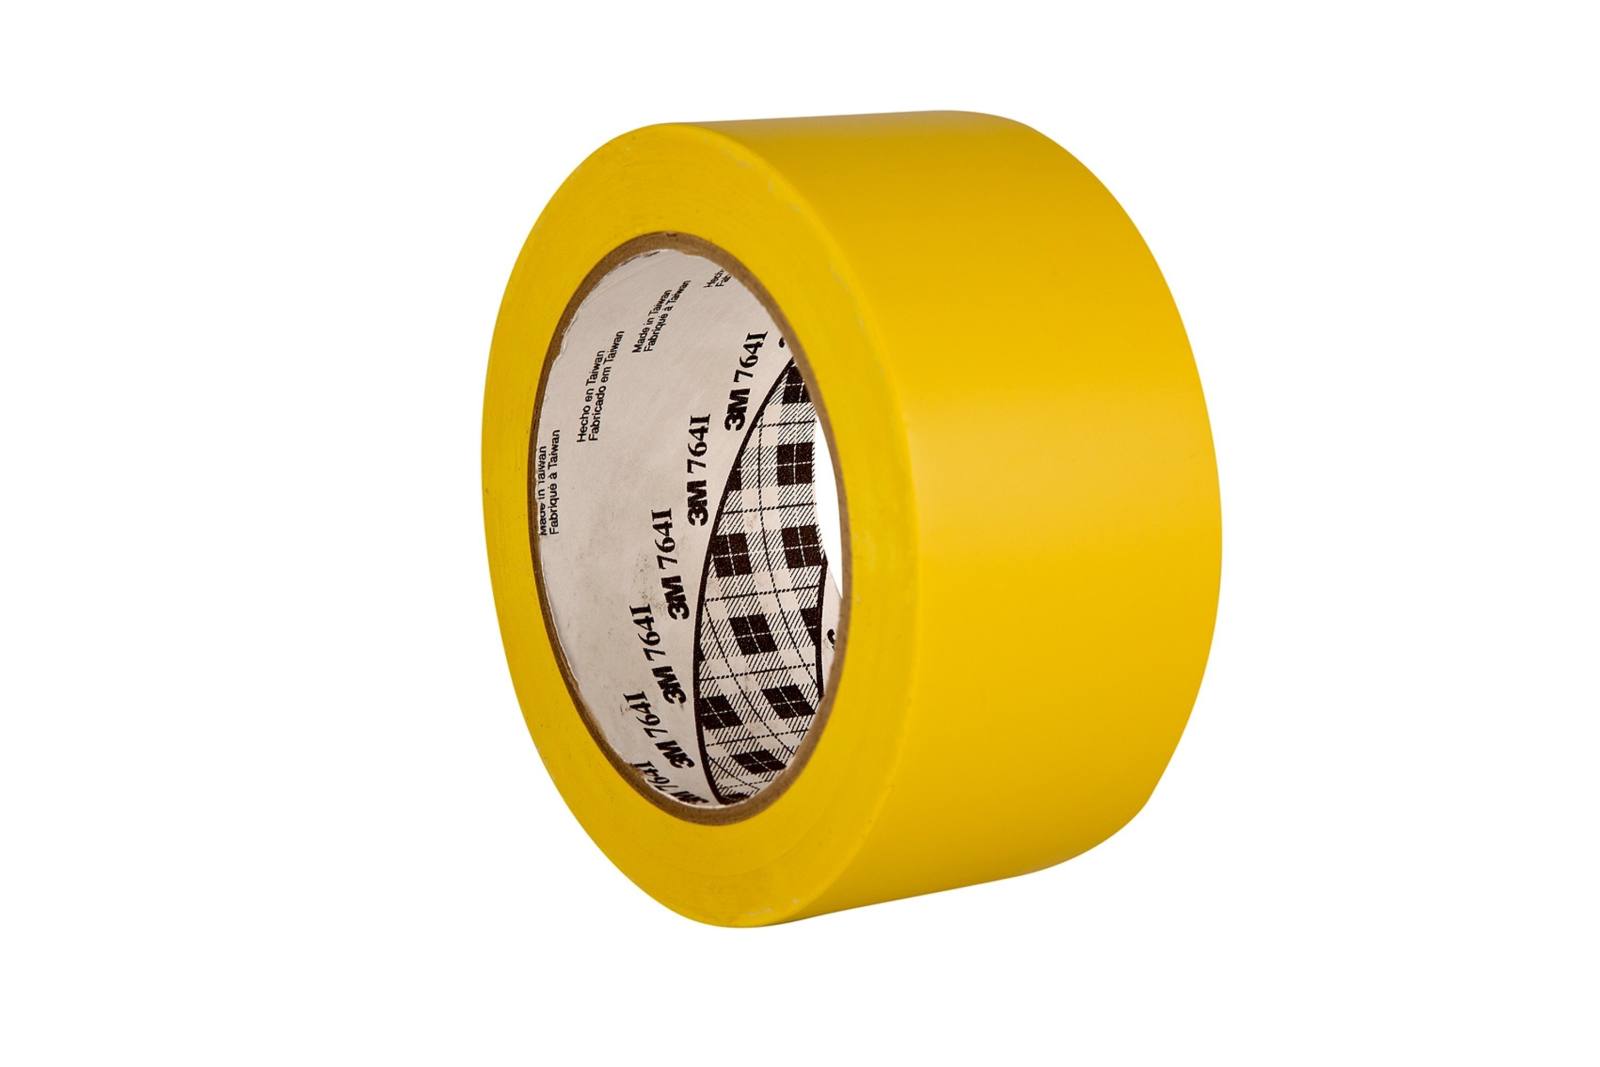 3M ruban adhésif universel en PVC 764, jaune, 50 mm x 33 m, emballage individuel pratique